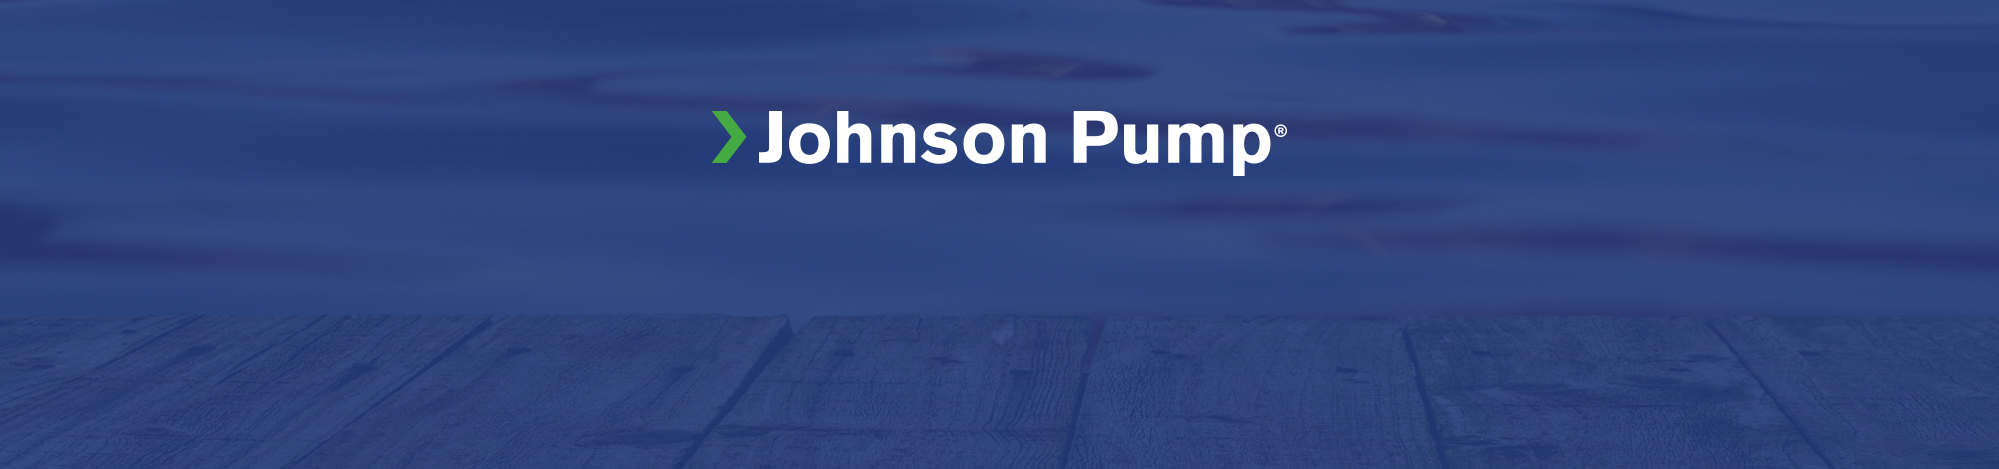 Johnson Pump Banner